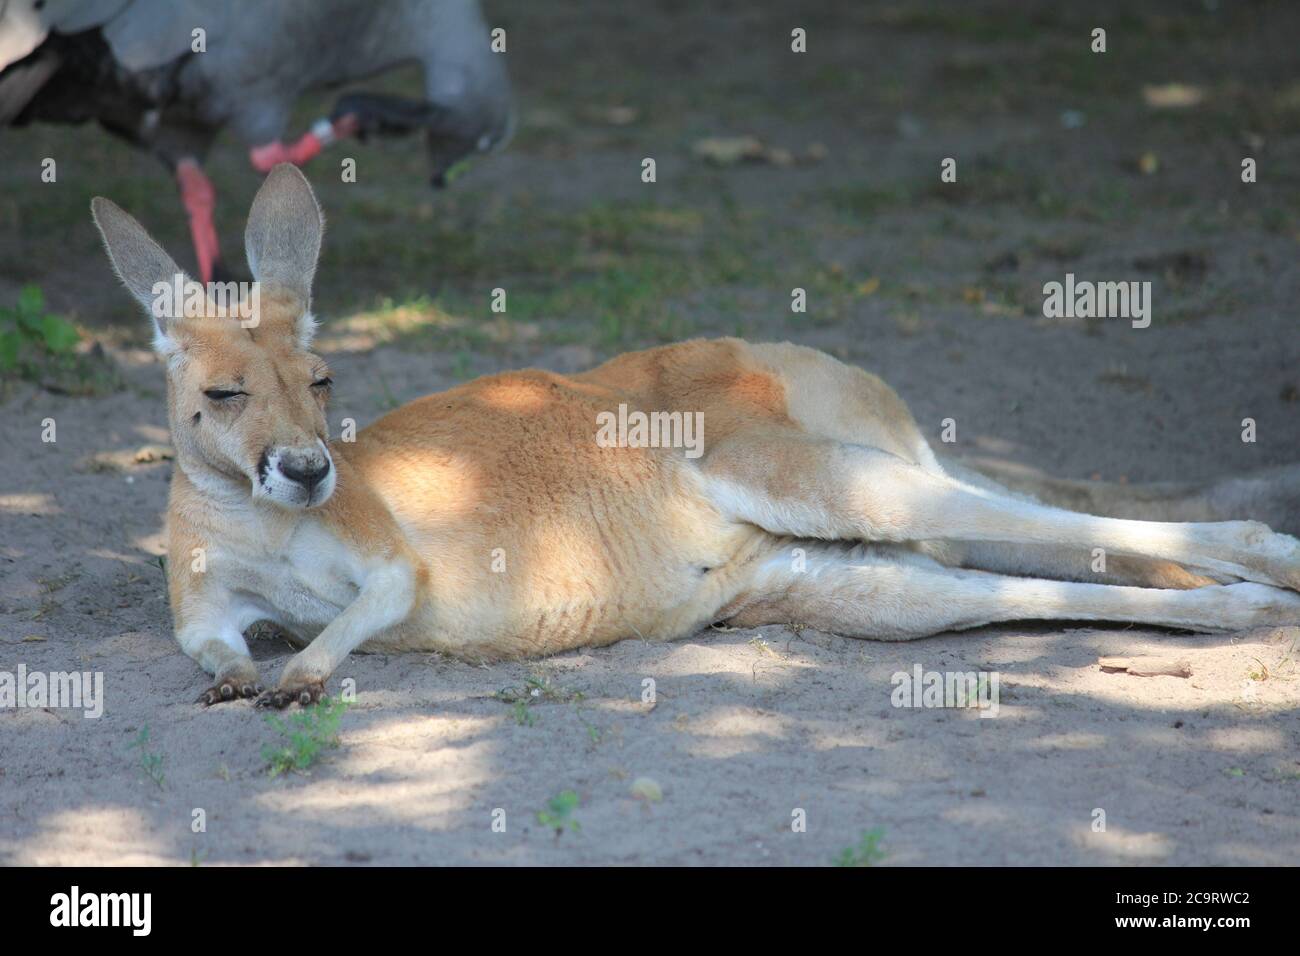 Red kangaroo in Overloon zoo in the Netherlands Stock Photo